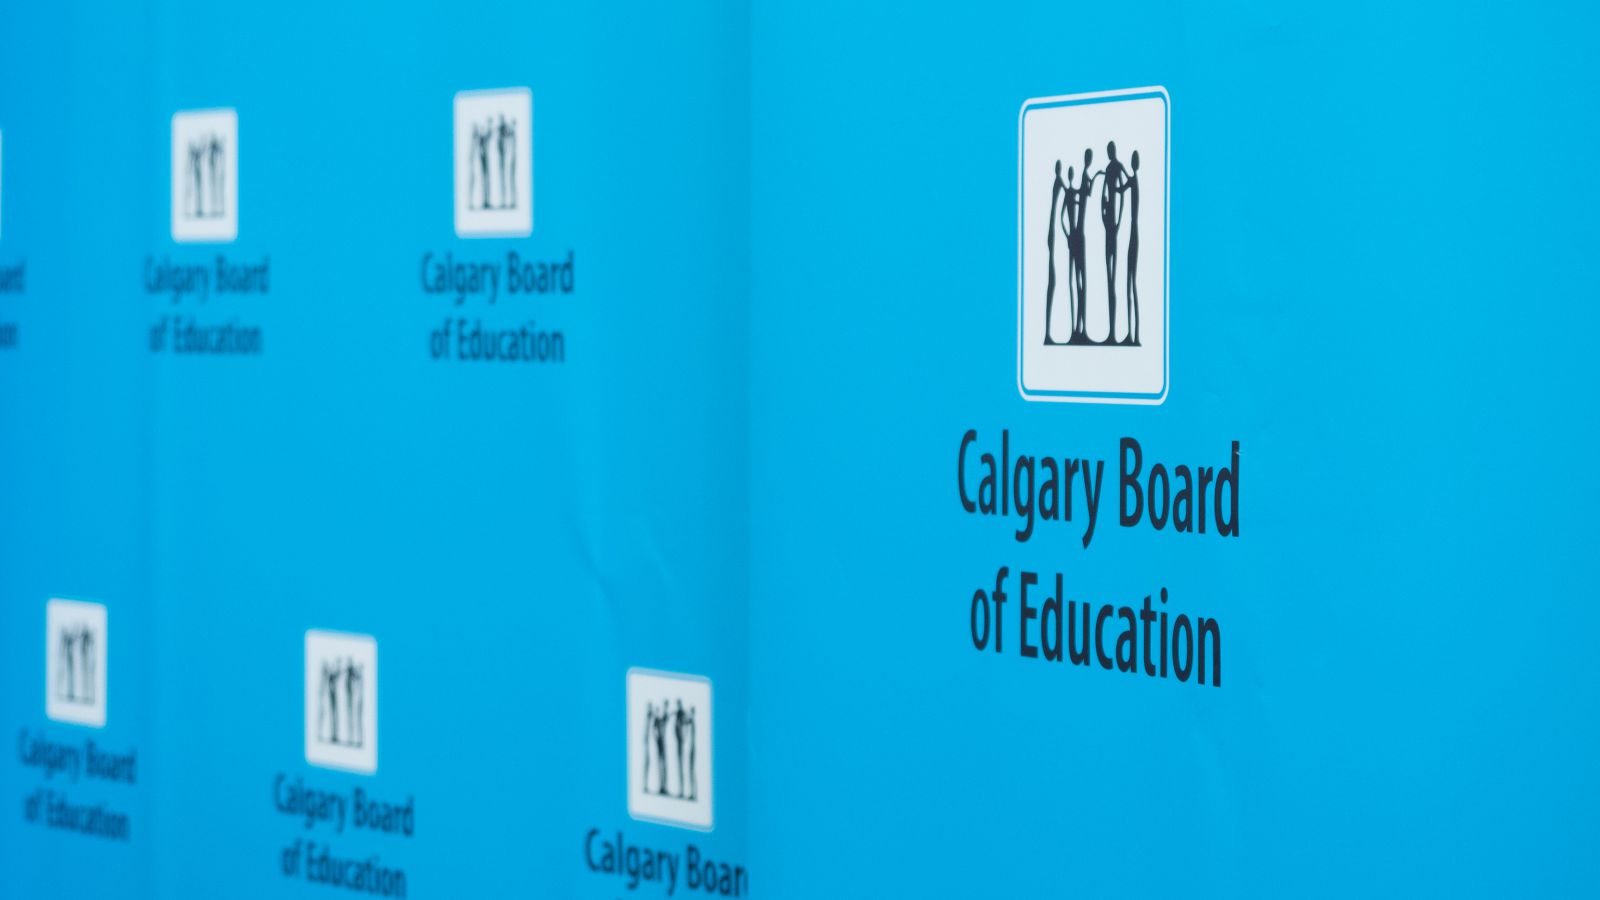 Cap nhat tinh hinh truong hoc Calgary Board of Education - Next Step